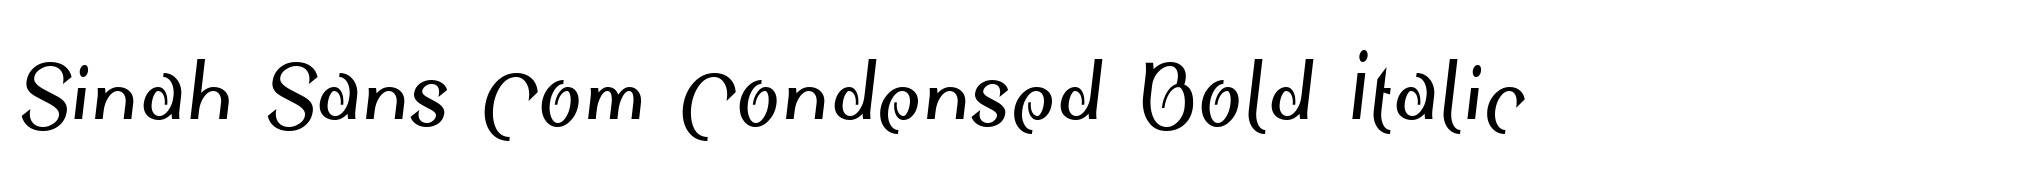 Sinah Sans Com Condensed Bold Italic image